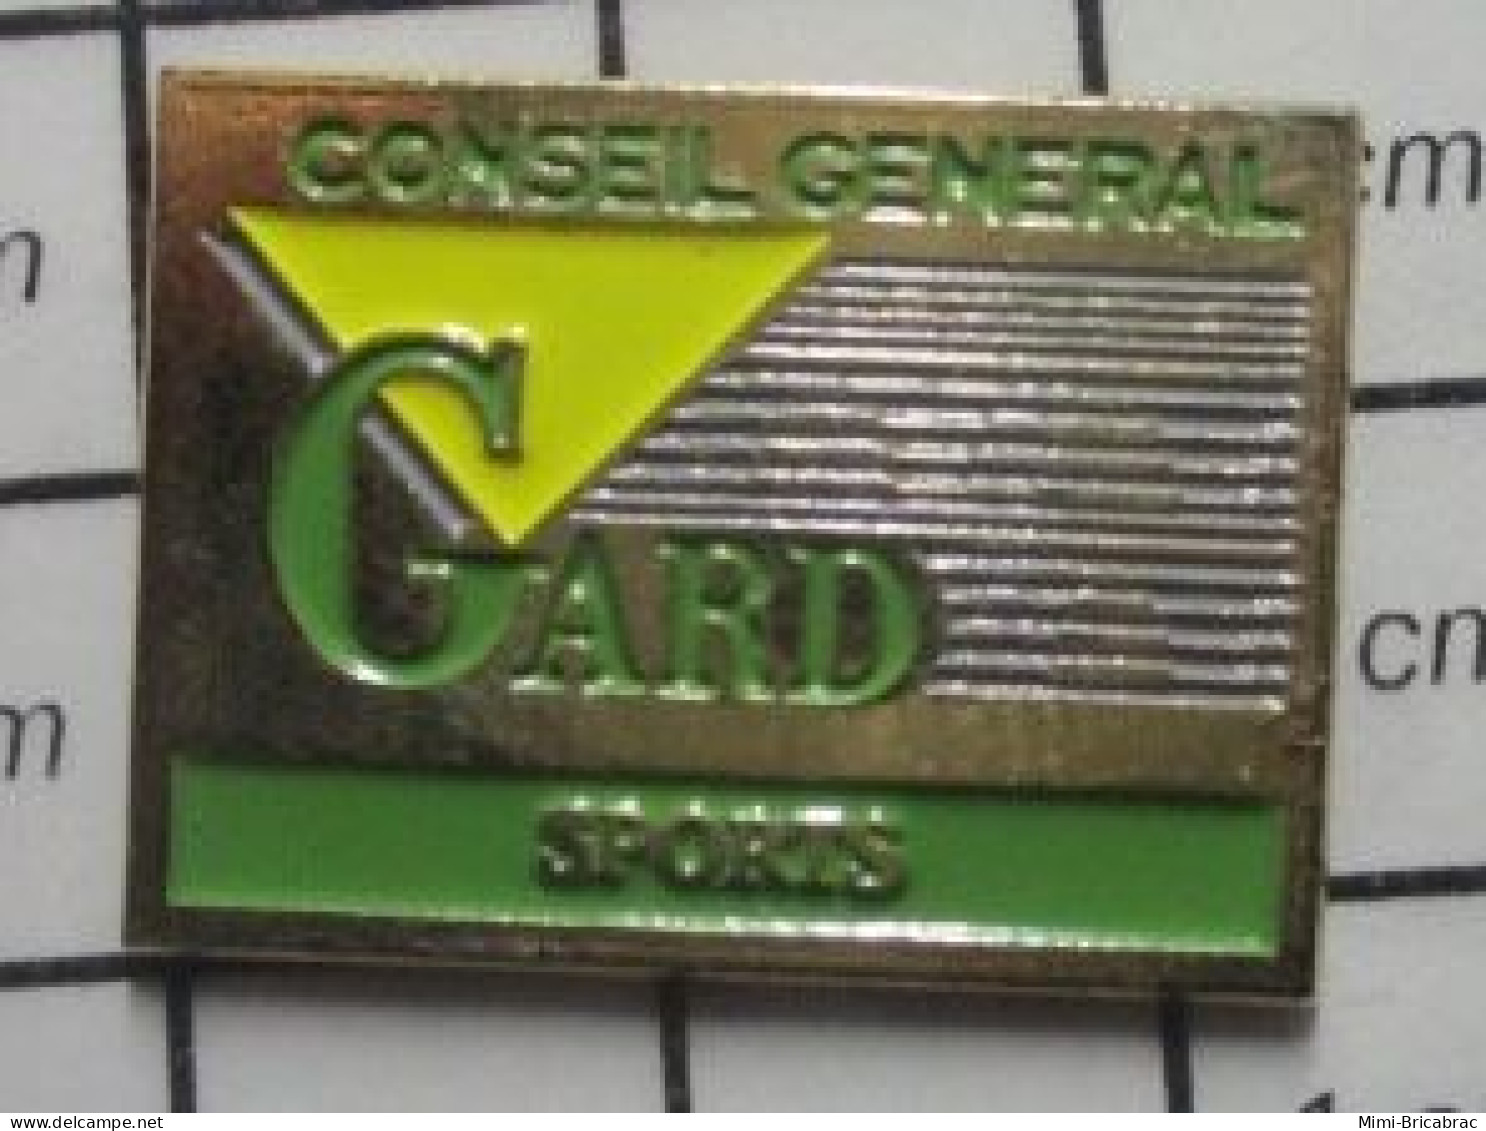 1920  Pin's Pins / Beau Et Rare / ADMINISTRATIONS / CONSEIL GENERAL DU GARD SPORTS - Administraties